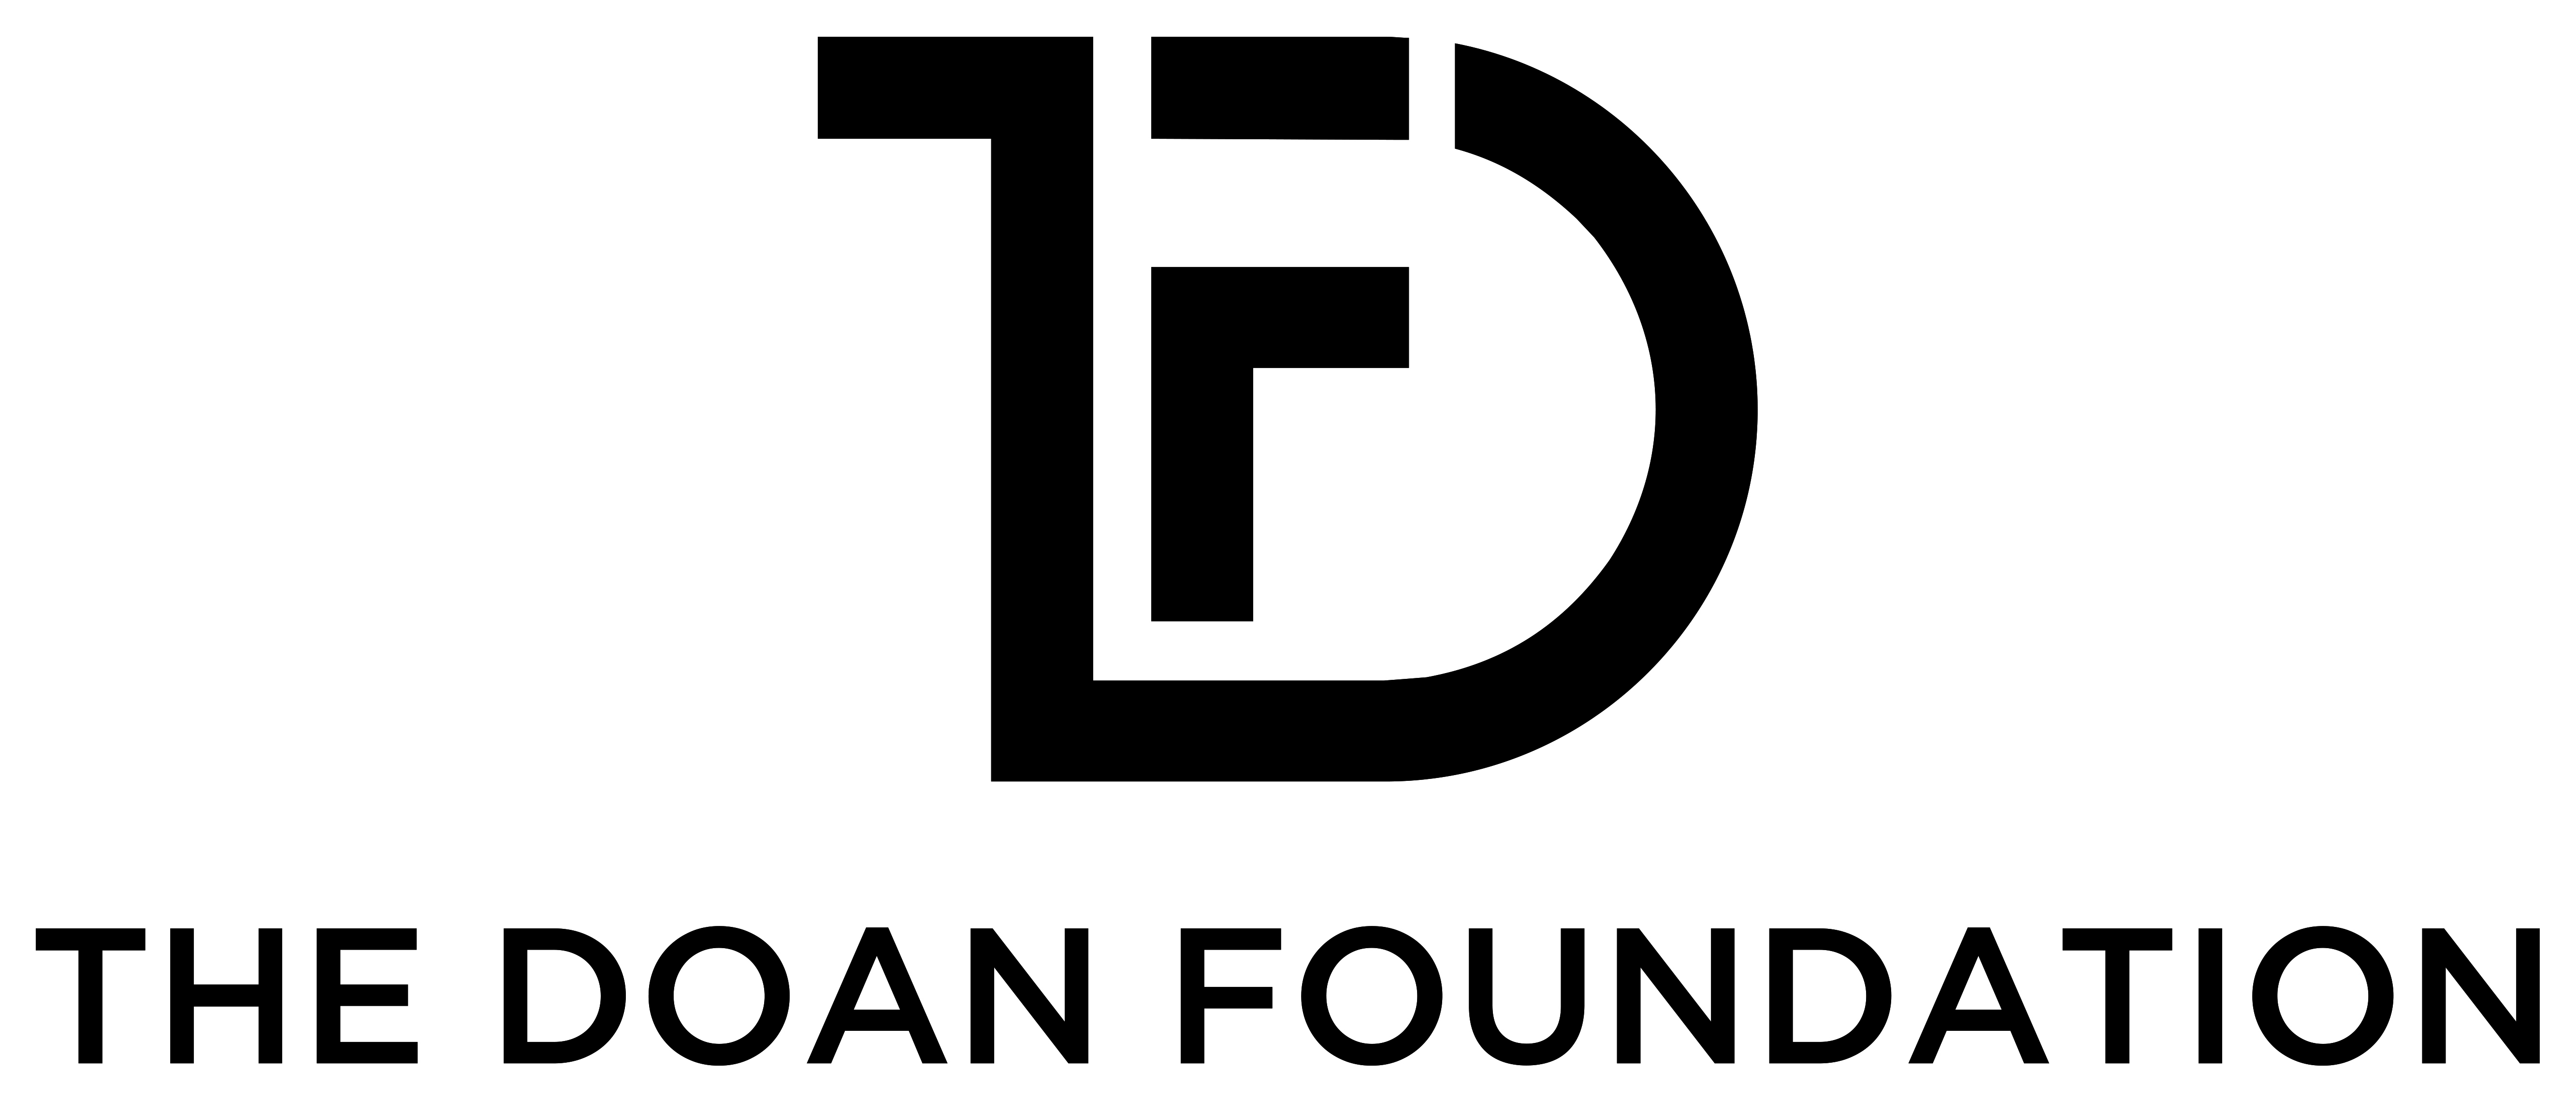 Doan Incorporated (The Doan Foundation) logo